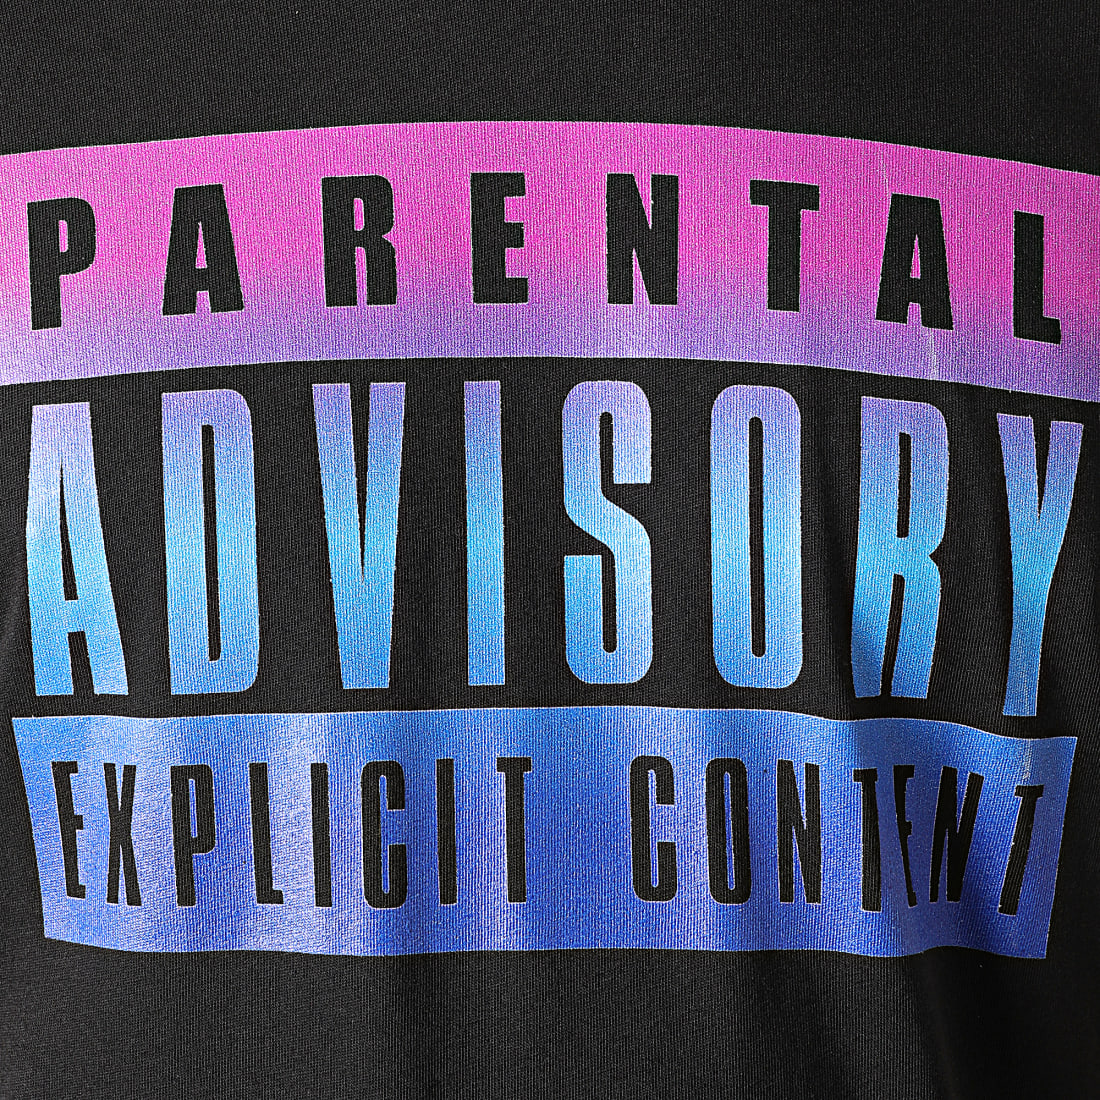 Parental Advisory - Tee Shirt Logo Gradient Noir Dégradé